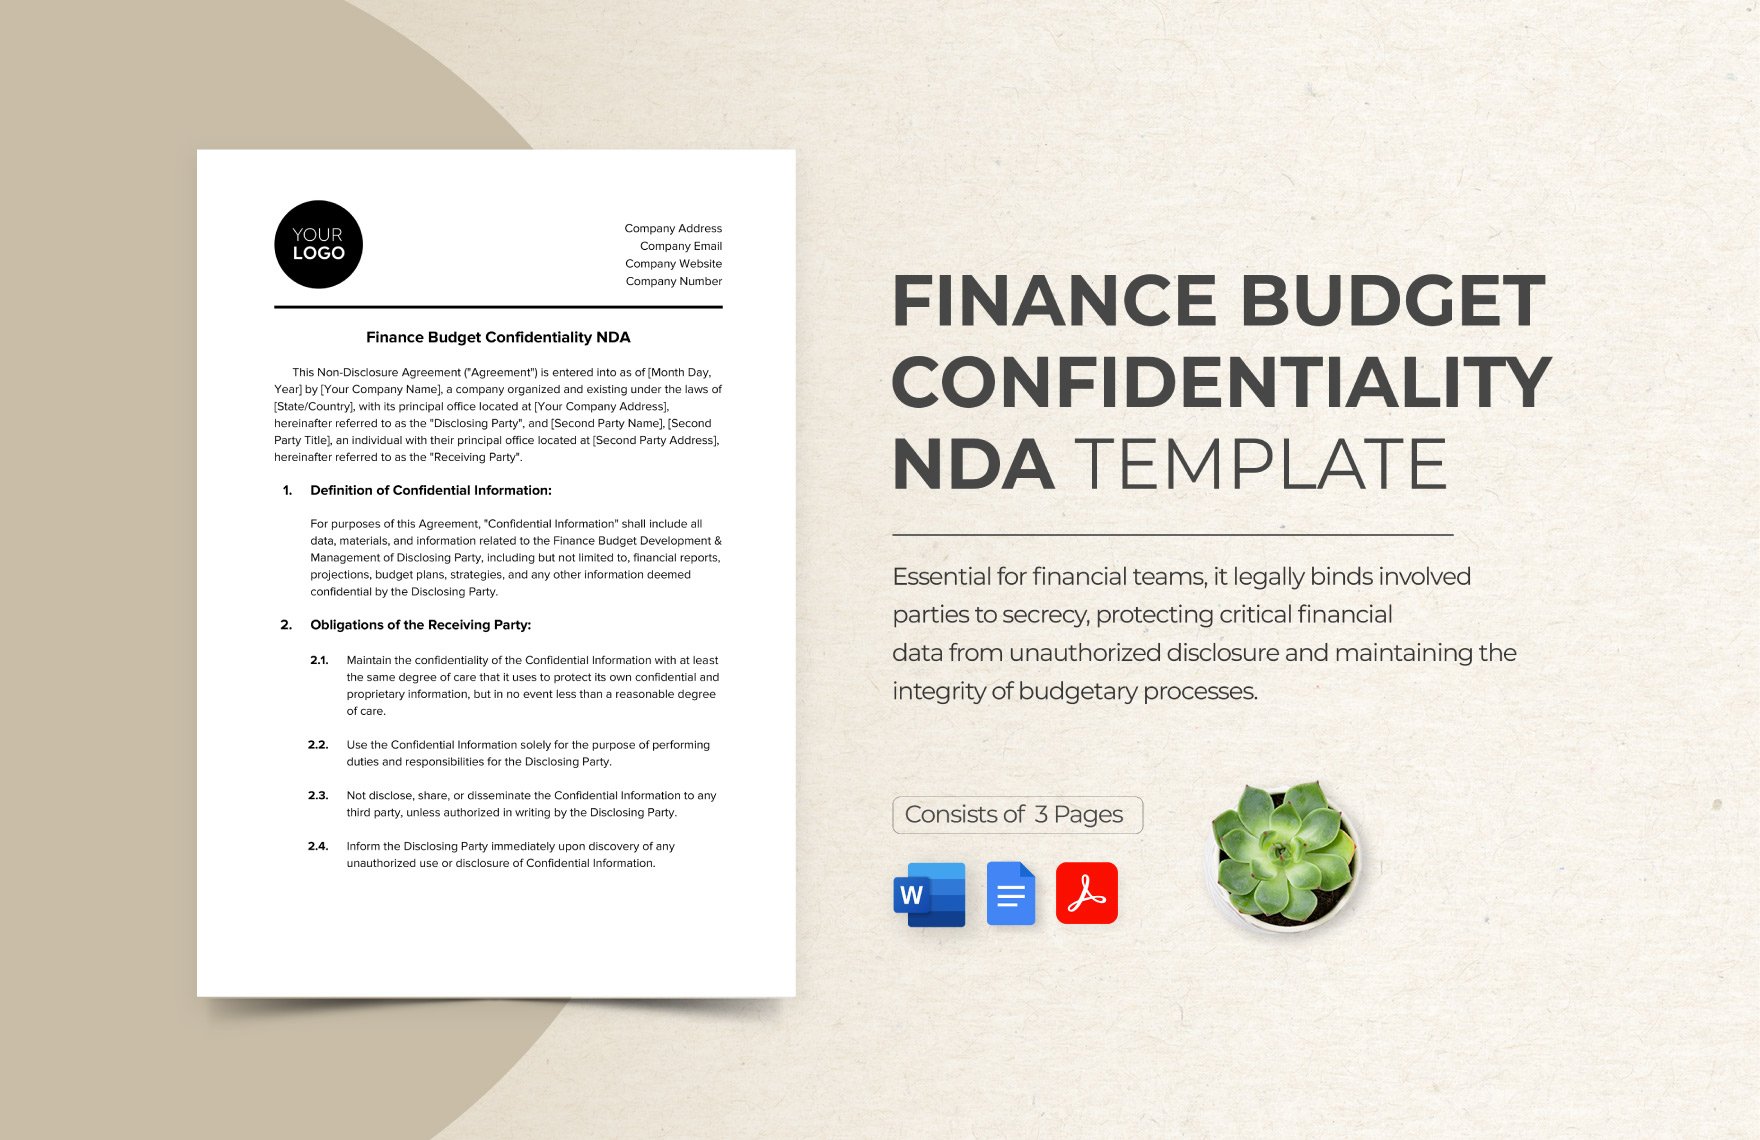 Finance Budget Confidentiality NDA Template